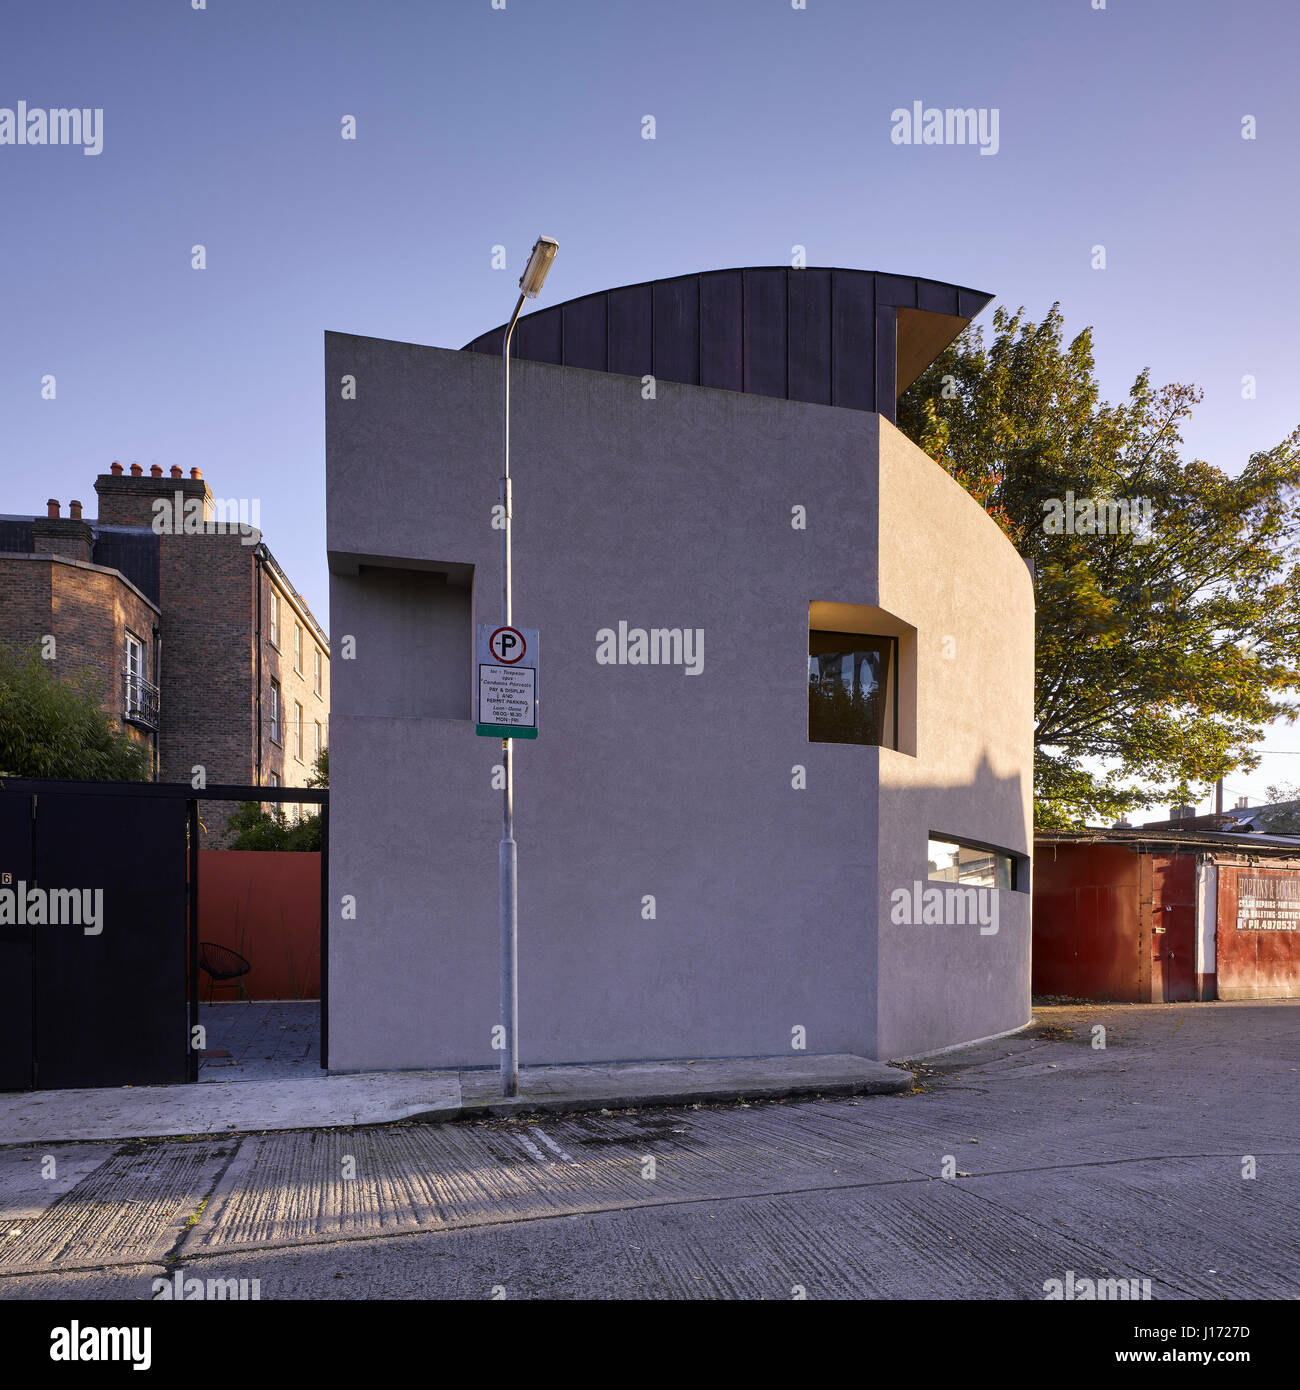 Exterior facade shown from street. K House, Ranelagh, Ireland. Architect: Architects Tom Maher, 2016. Stock Photo